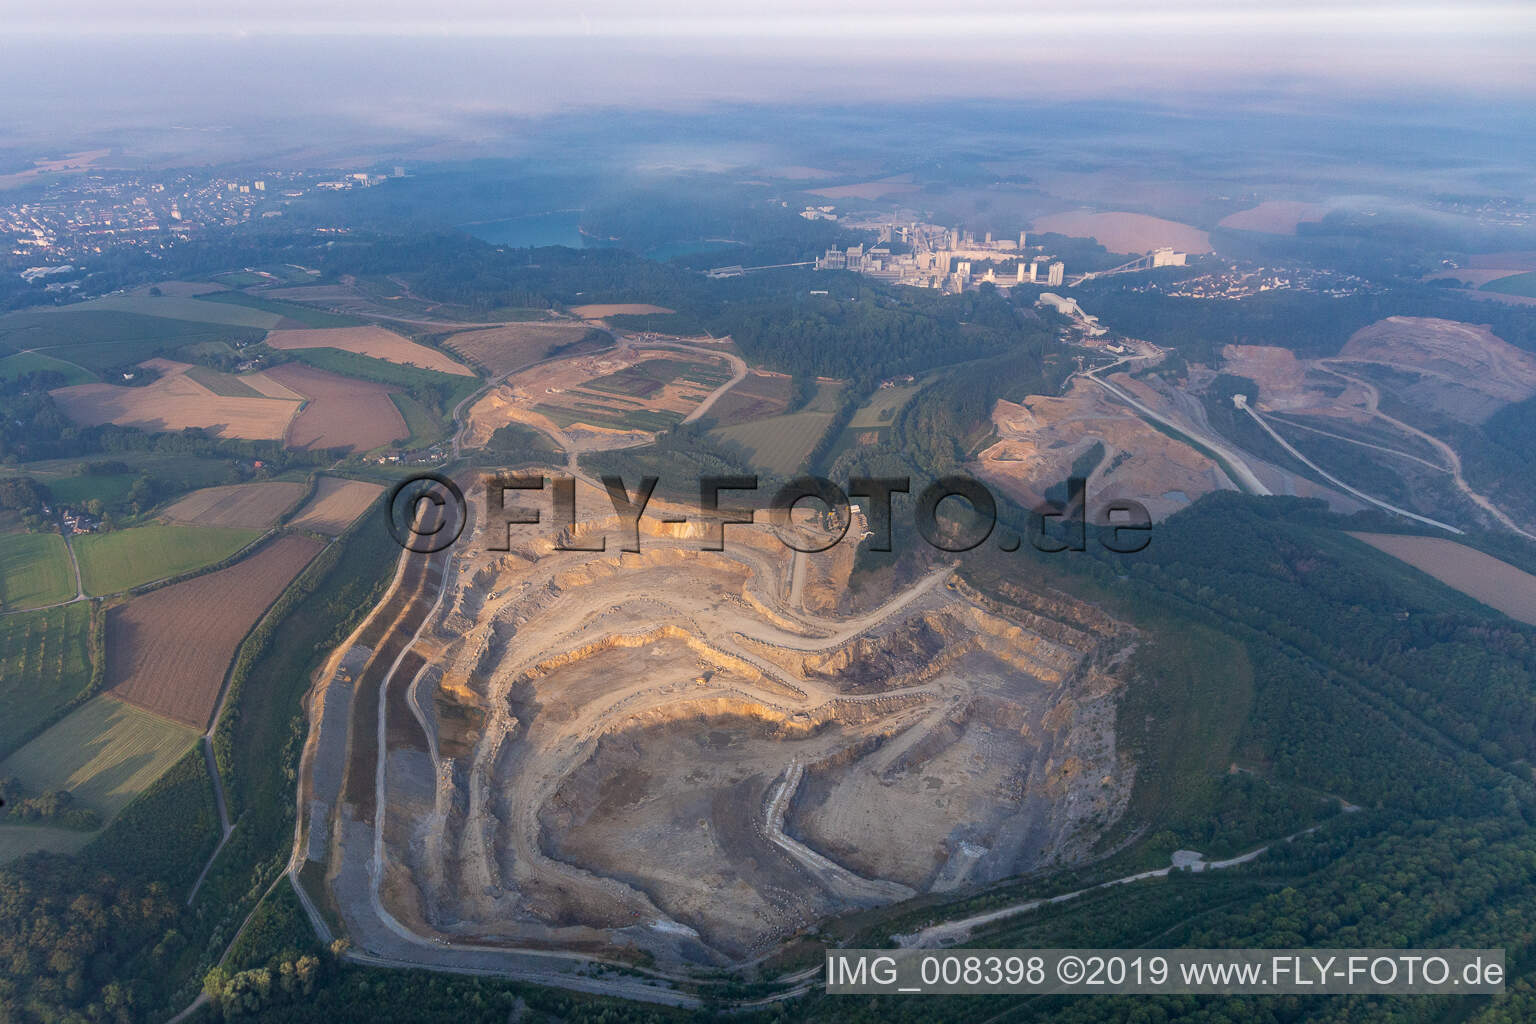 Oblique view of Rütkausen opencast mine of the Lhoist Rheinkalk plant in Flandersbach in Wülfrath in the state North Rhine-Westphalia, Germany